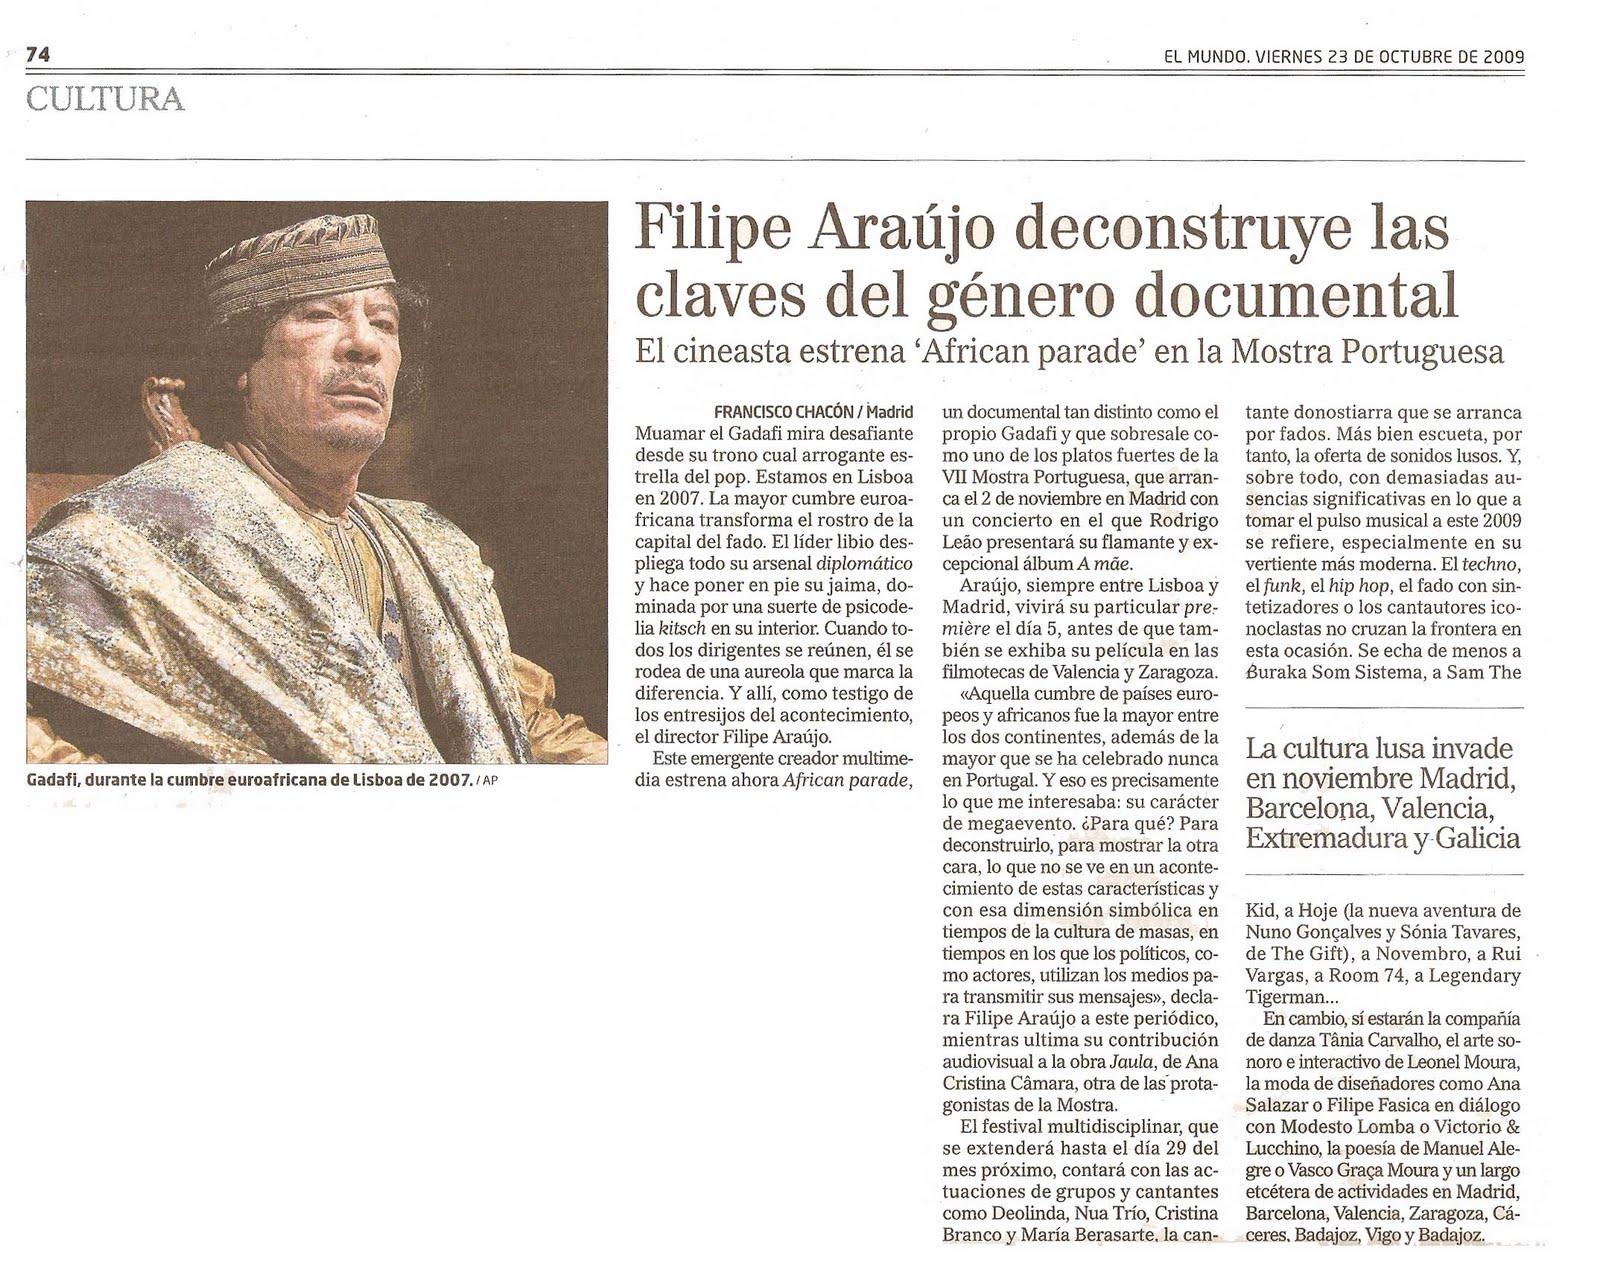 El Mundo - newspaper article (Spanish)